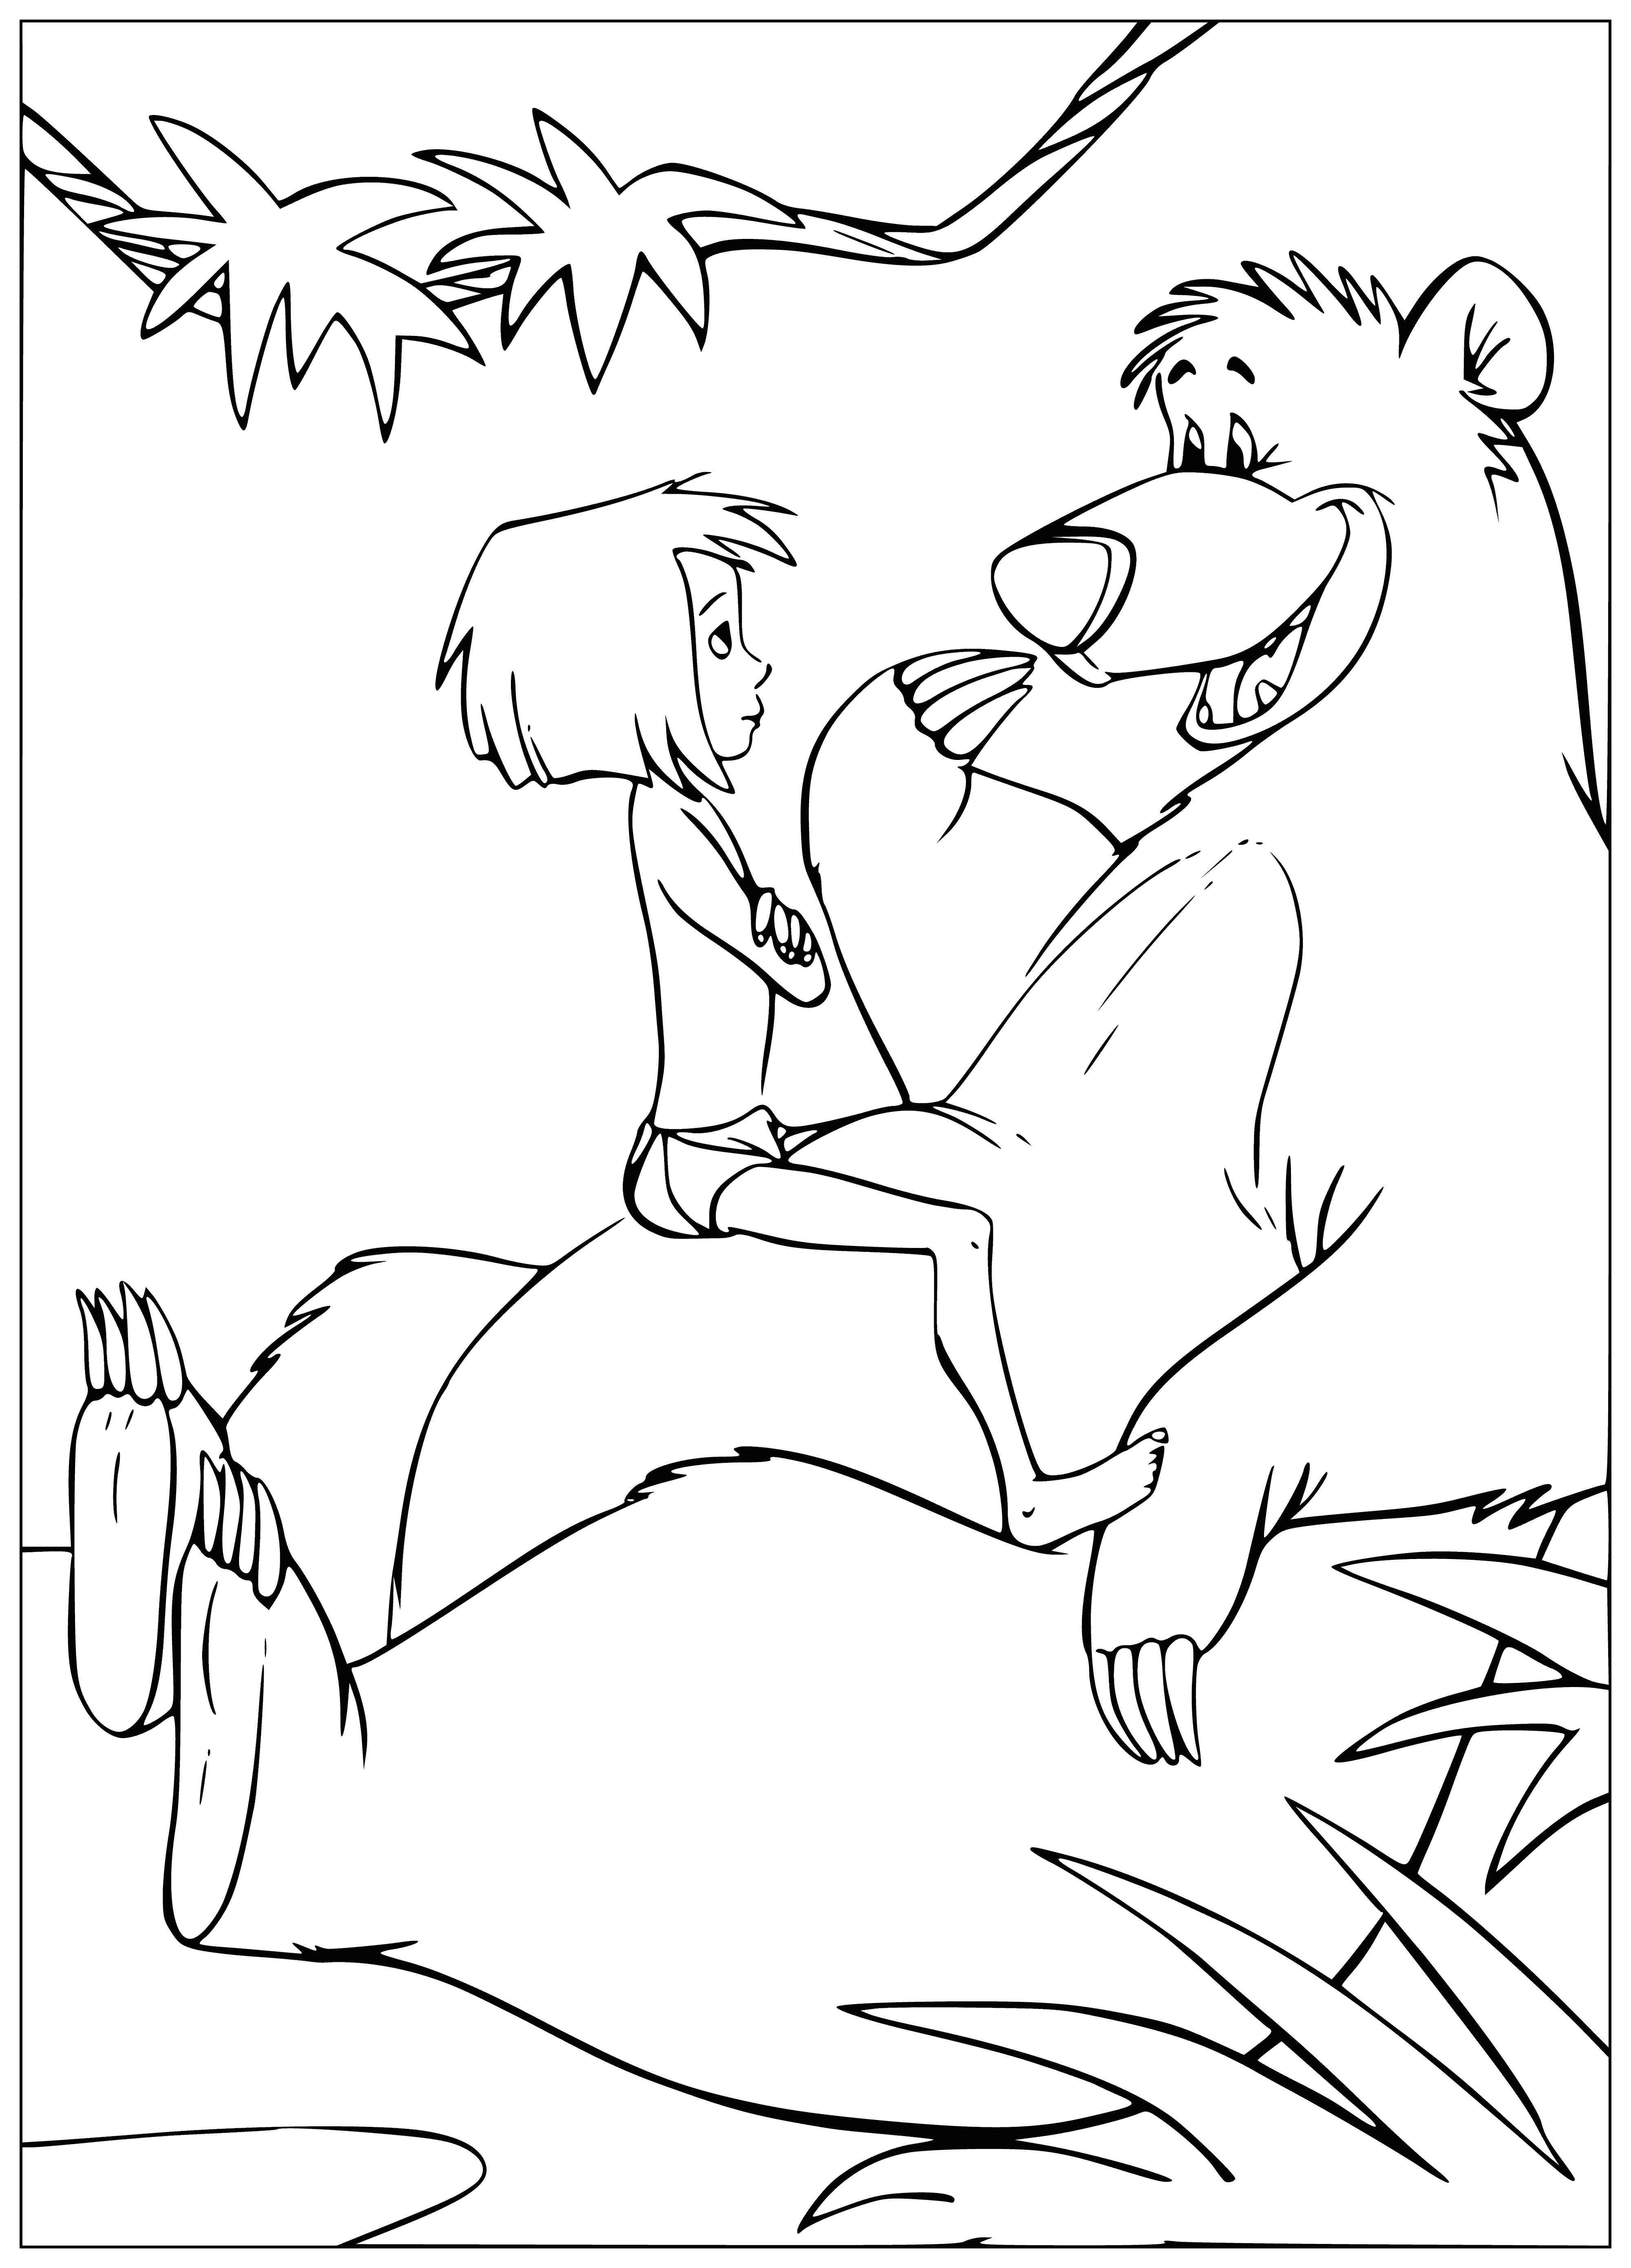 Mowgli and Baloo coloring page